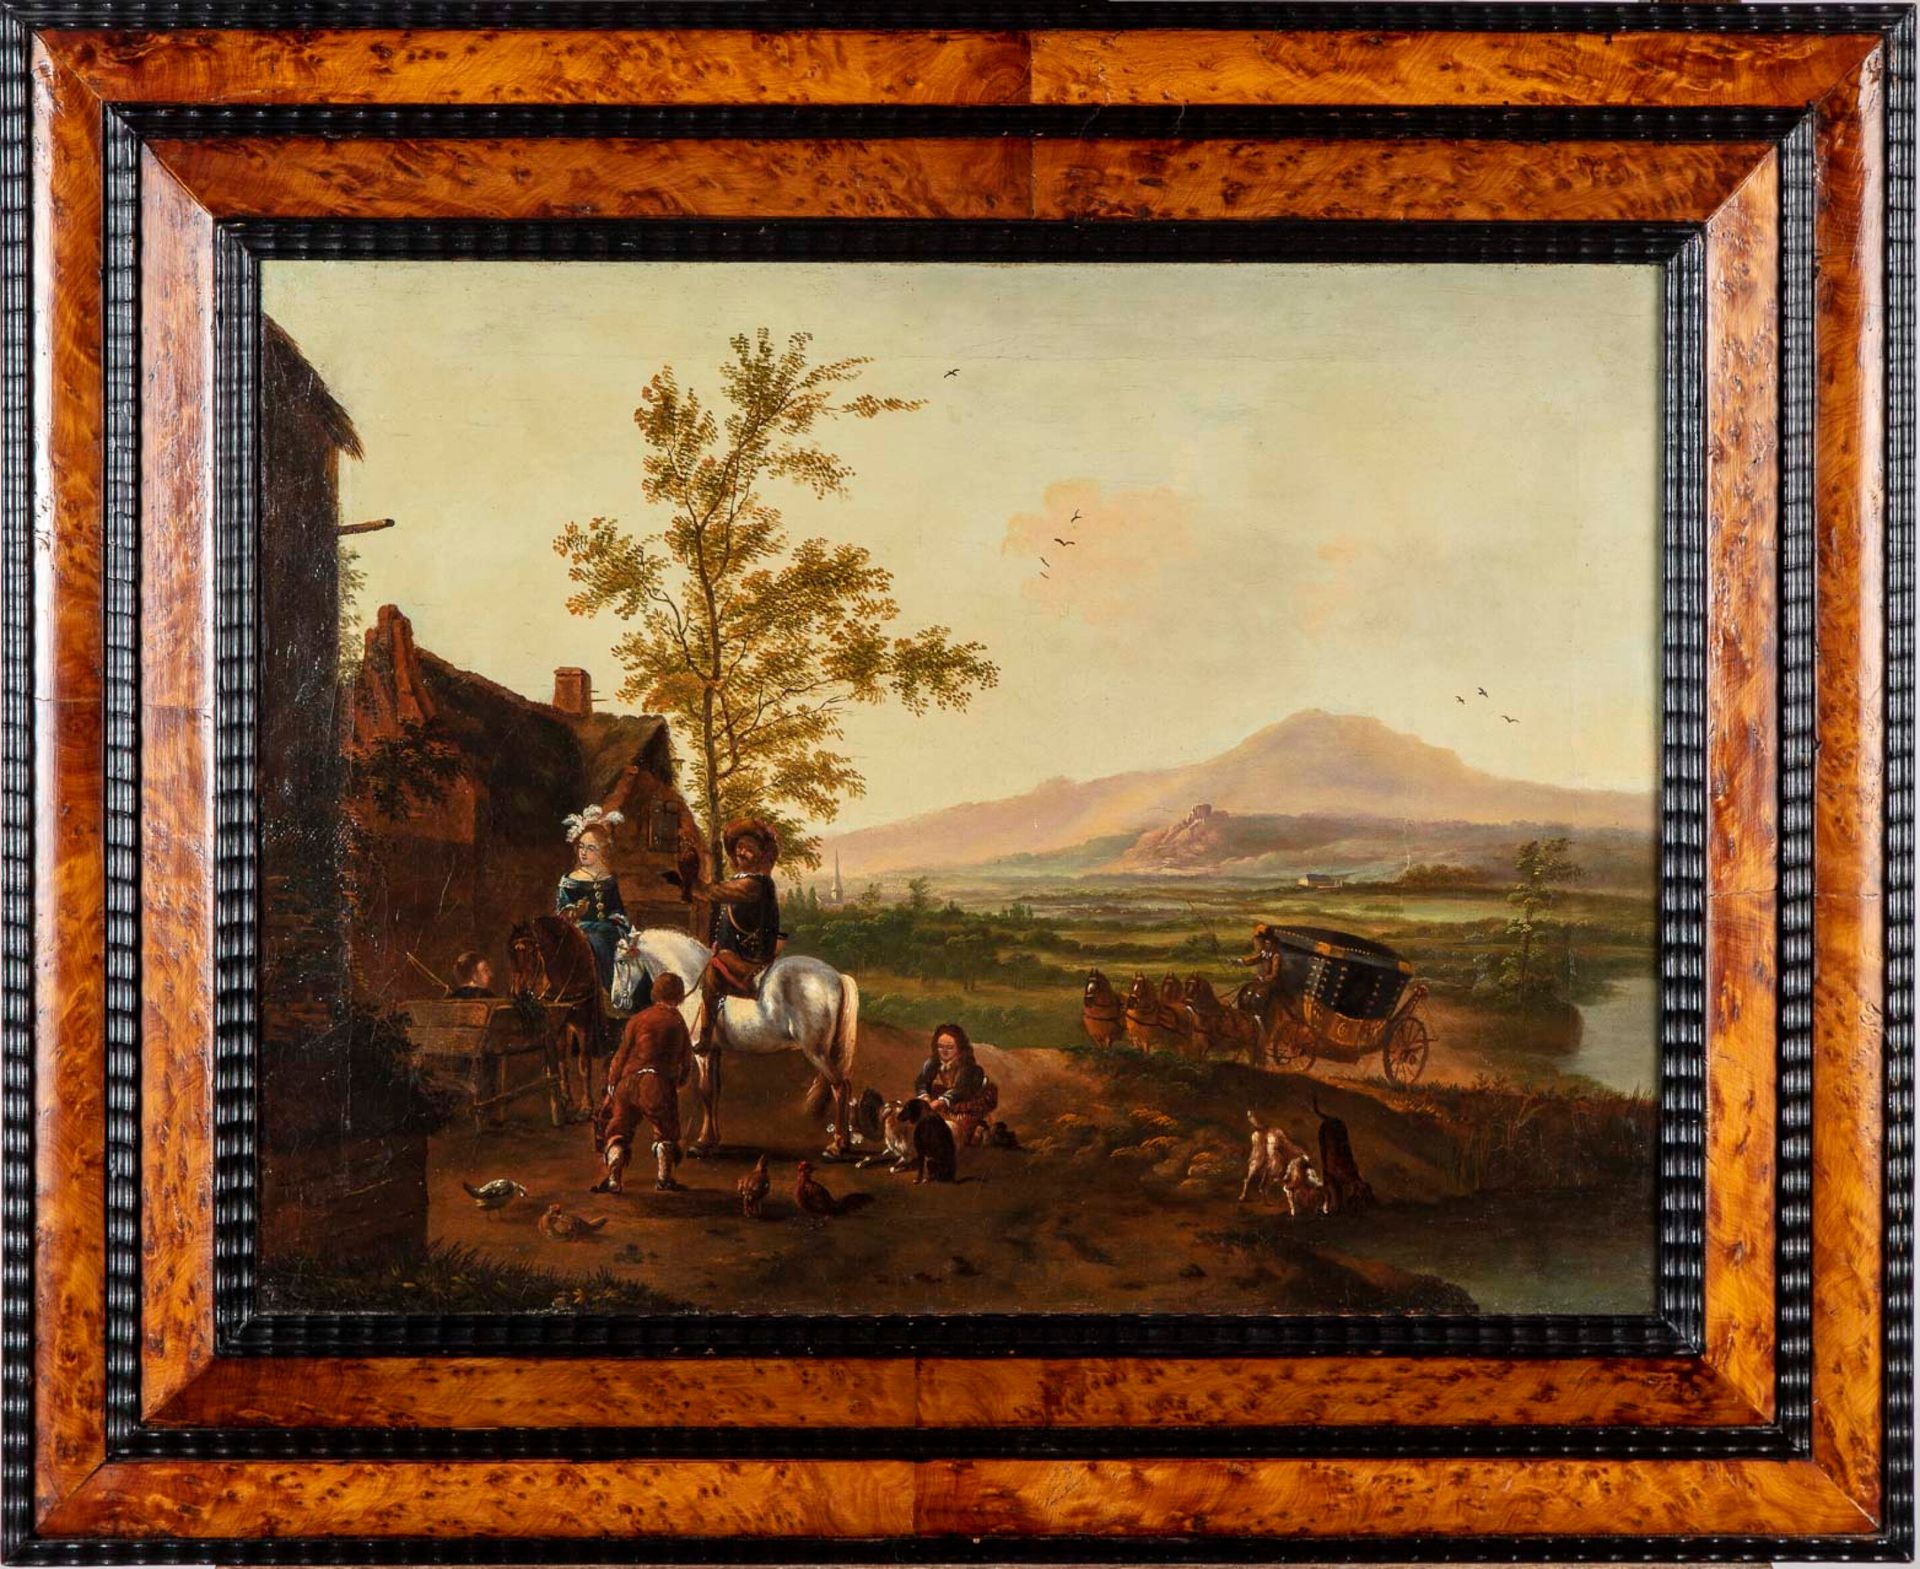 VAN FALENS Nello stile di Carl van FALENS (1683-1733)

La partenza per la caccia&hellip;